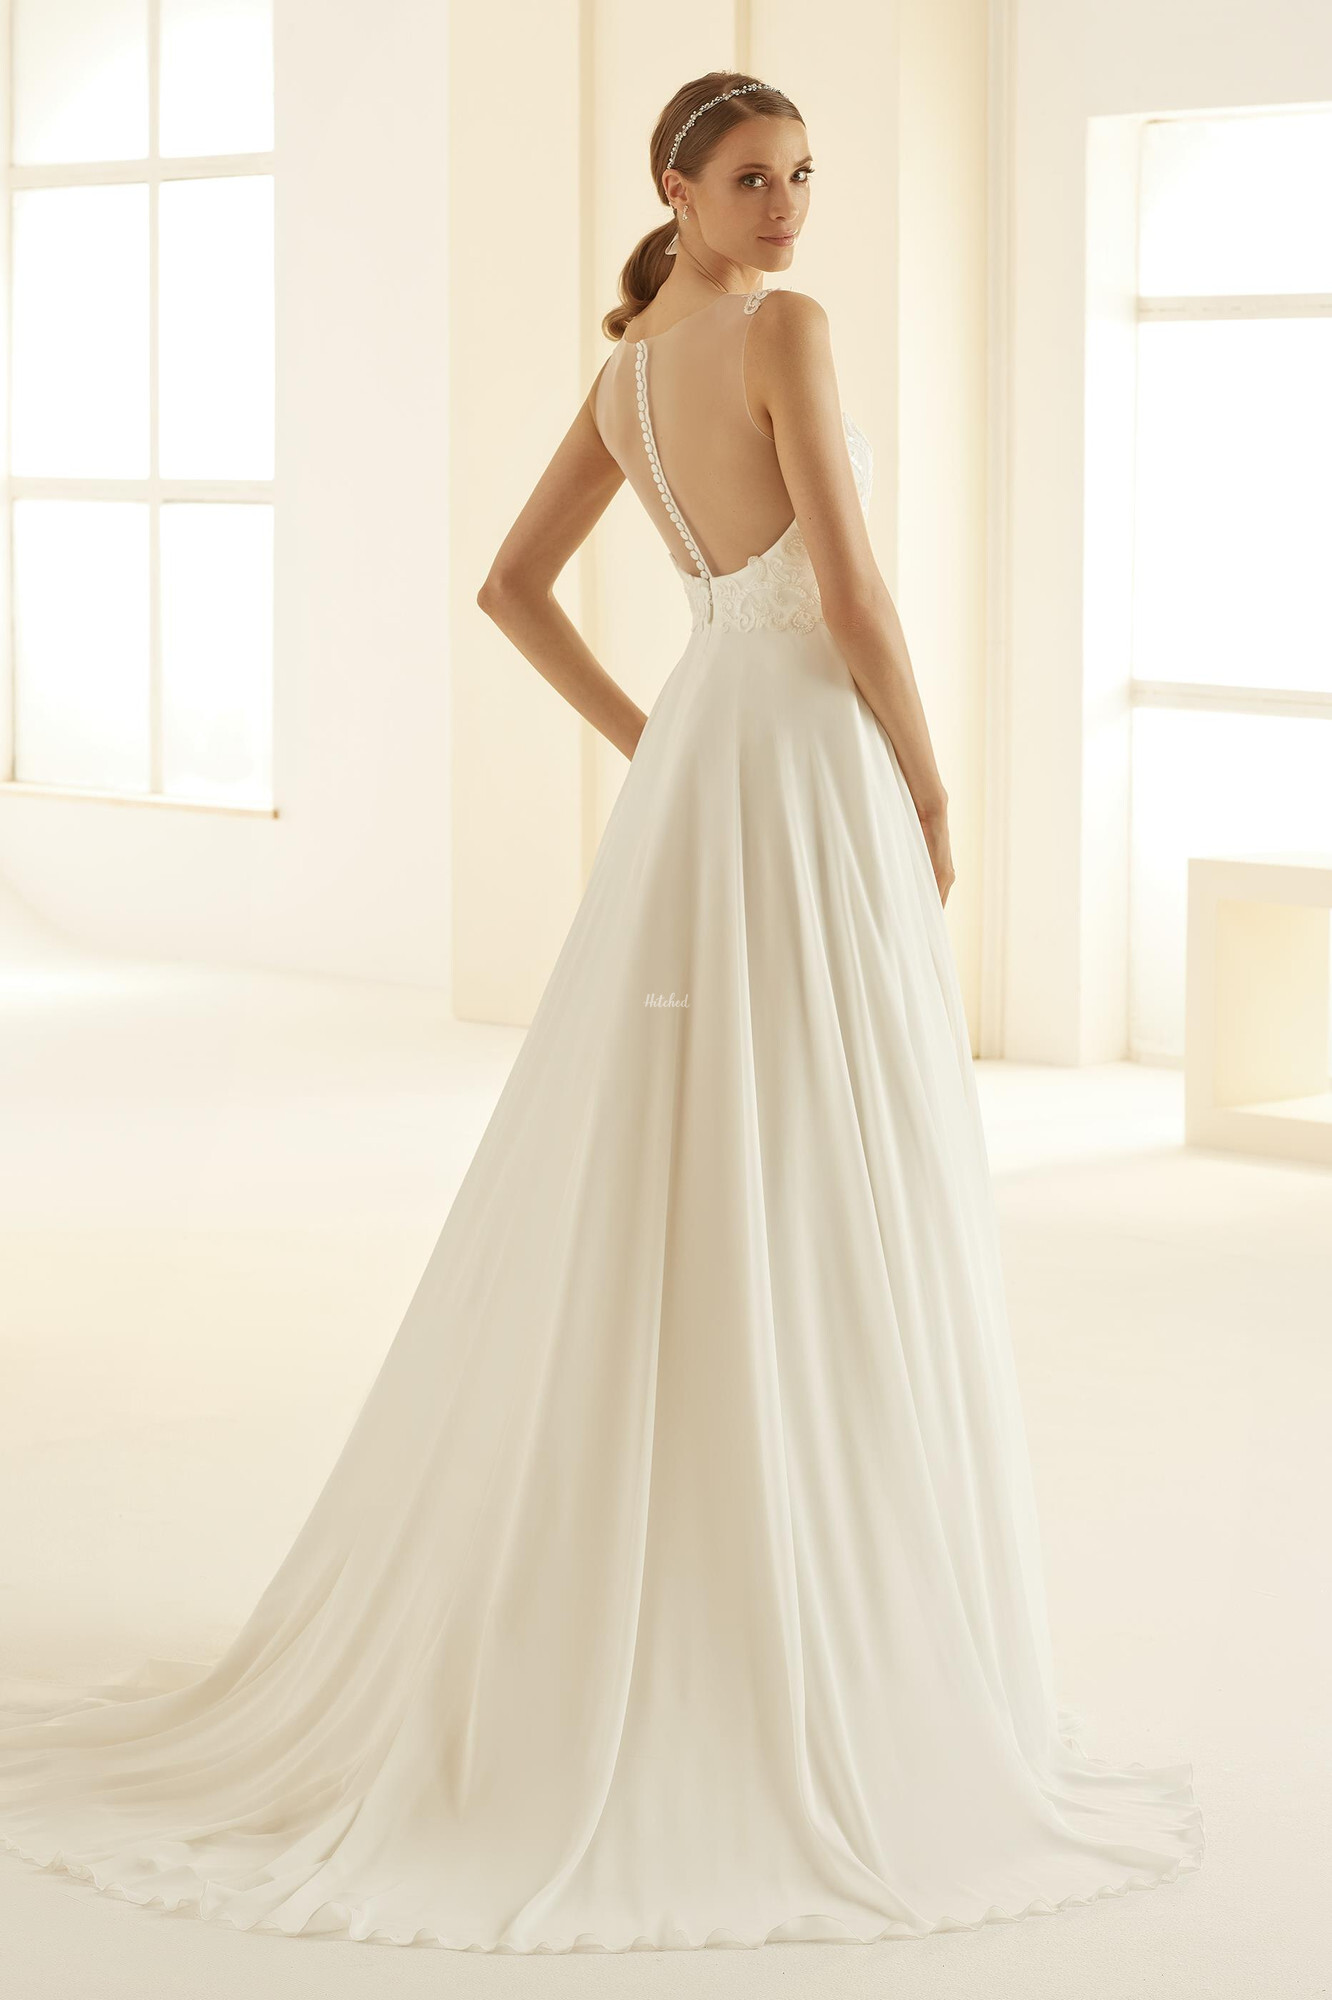 Pandora Wedding Dress from Bianco Evento - hitched.co.uk